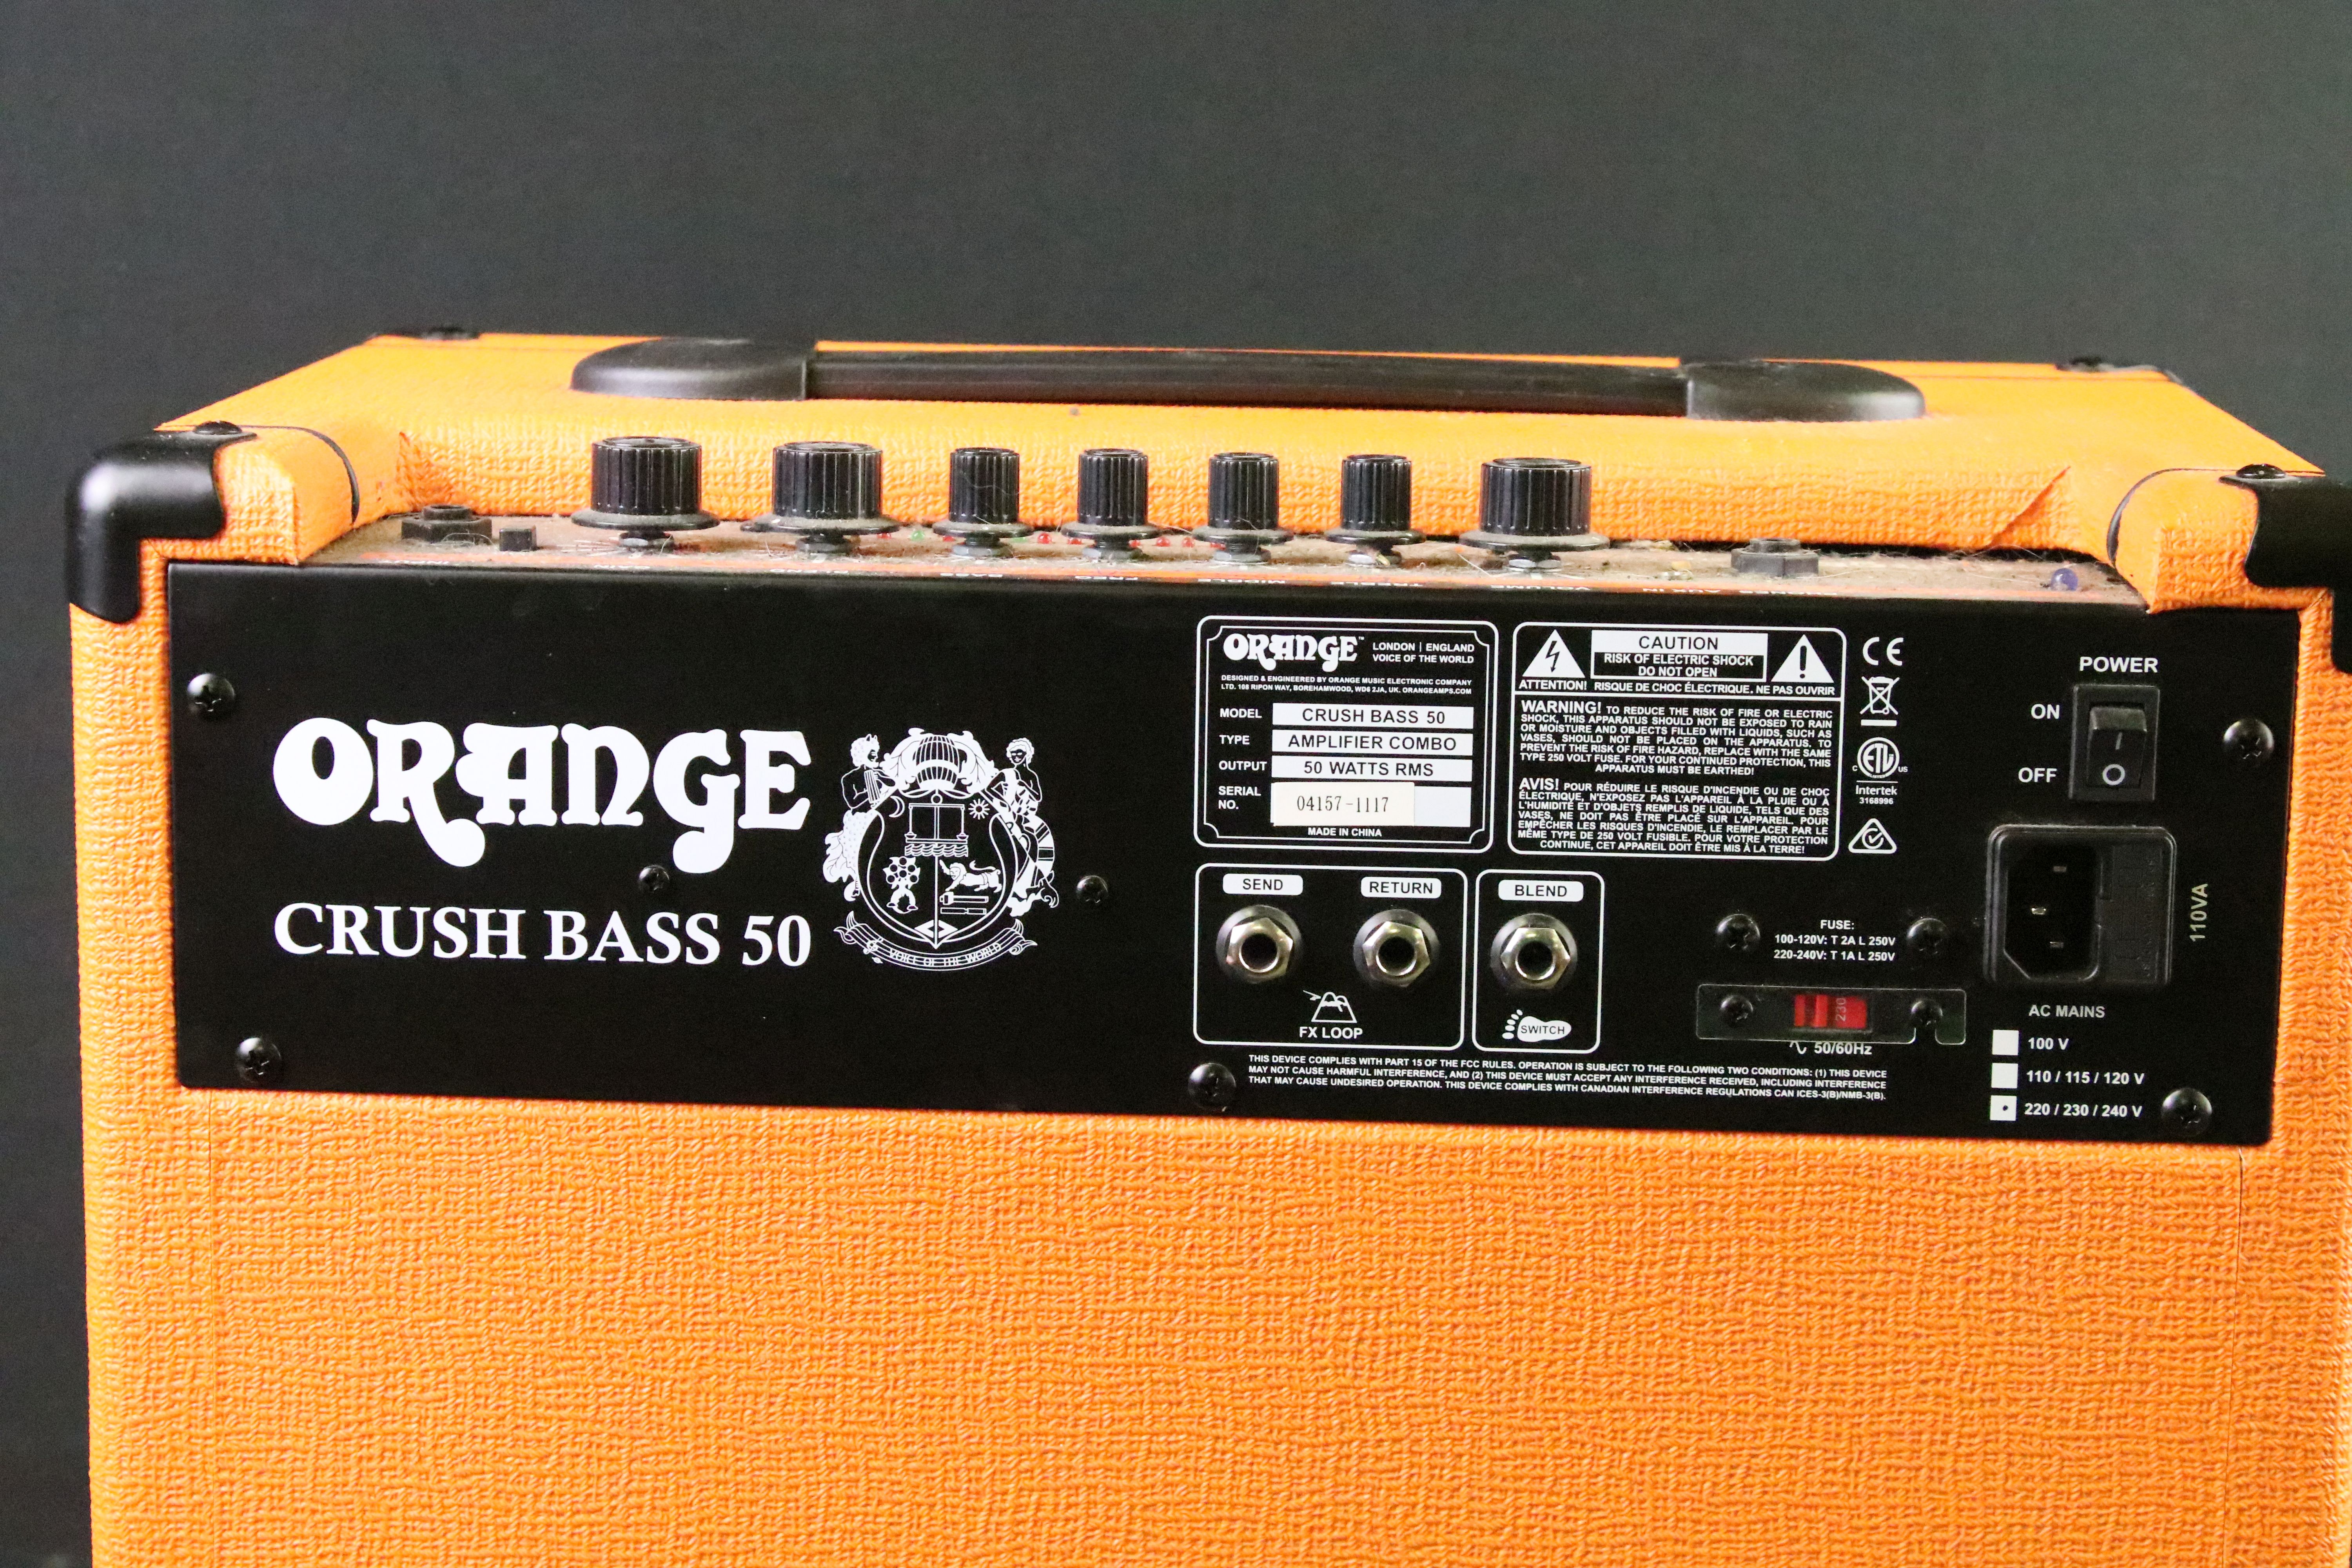 Amp - Orange Crush Bass 50 combo amp with pedal - Image 5 of 9